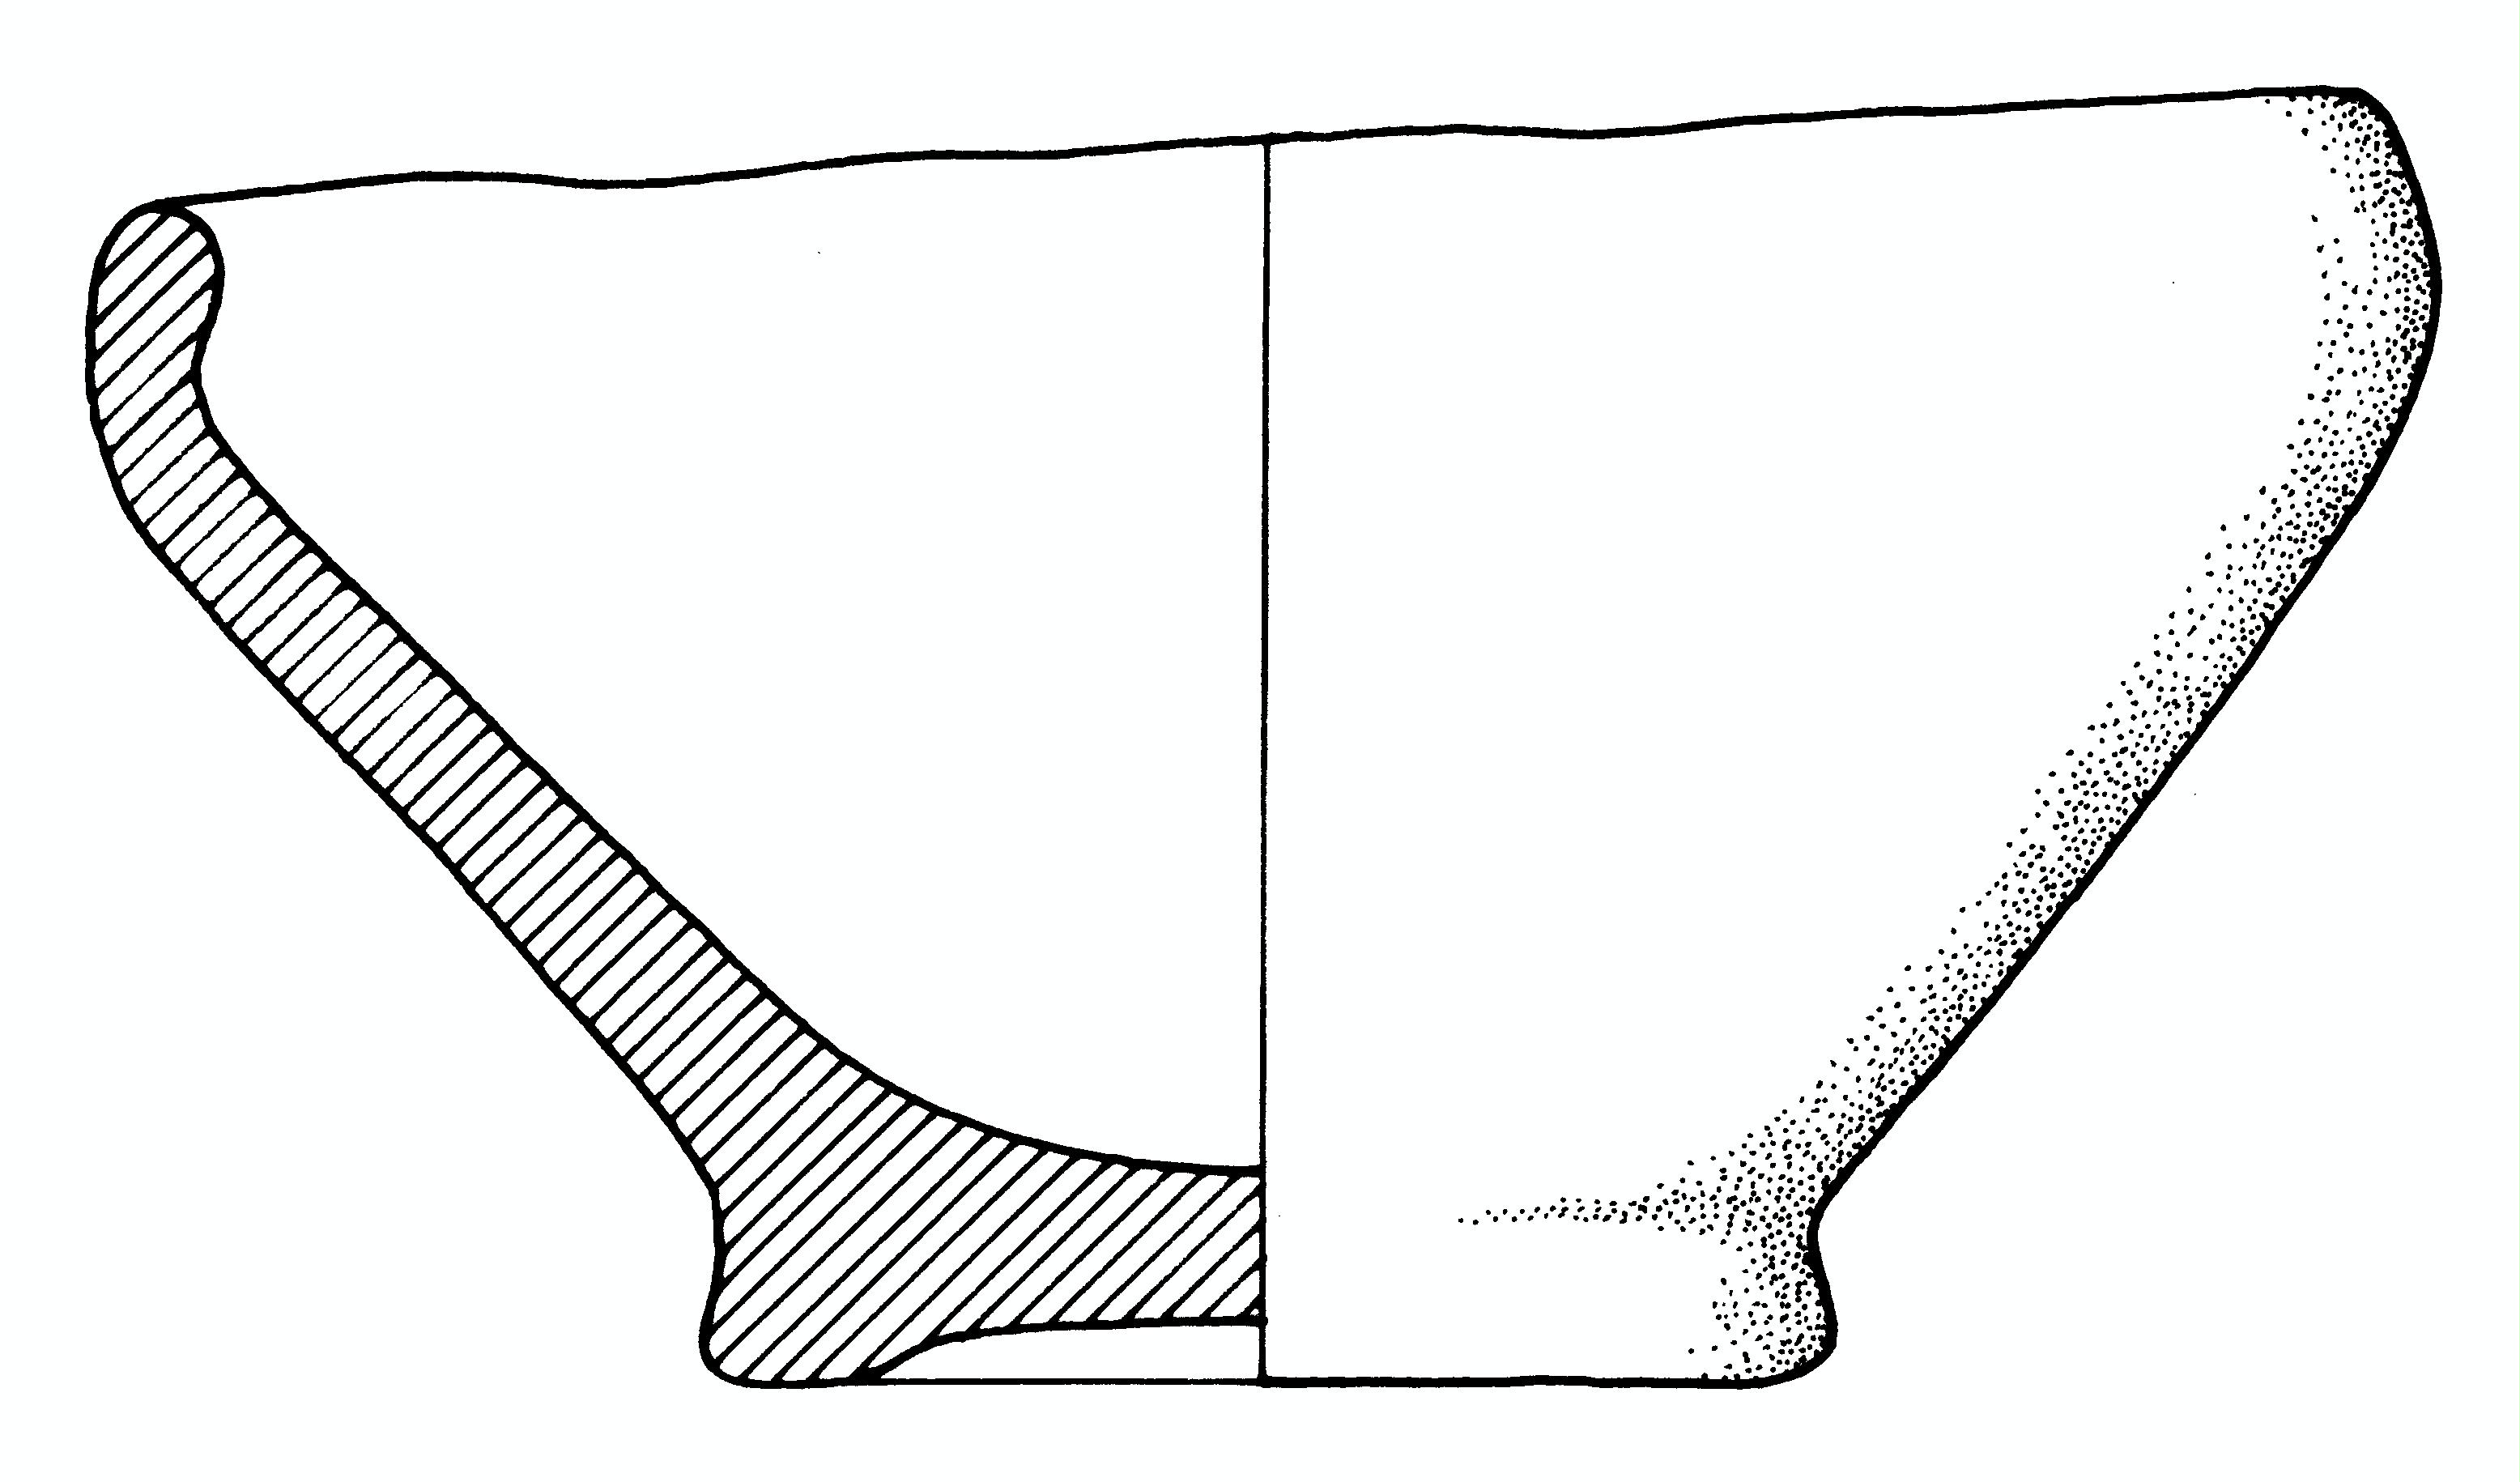 ciotola (primo quarto III a.C)